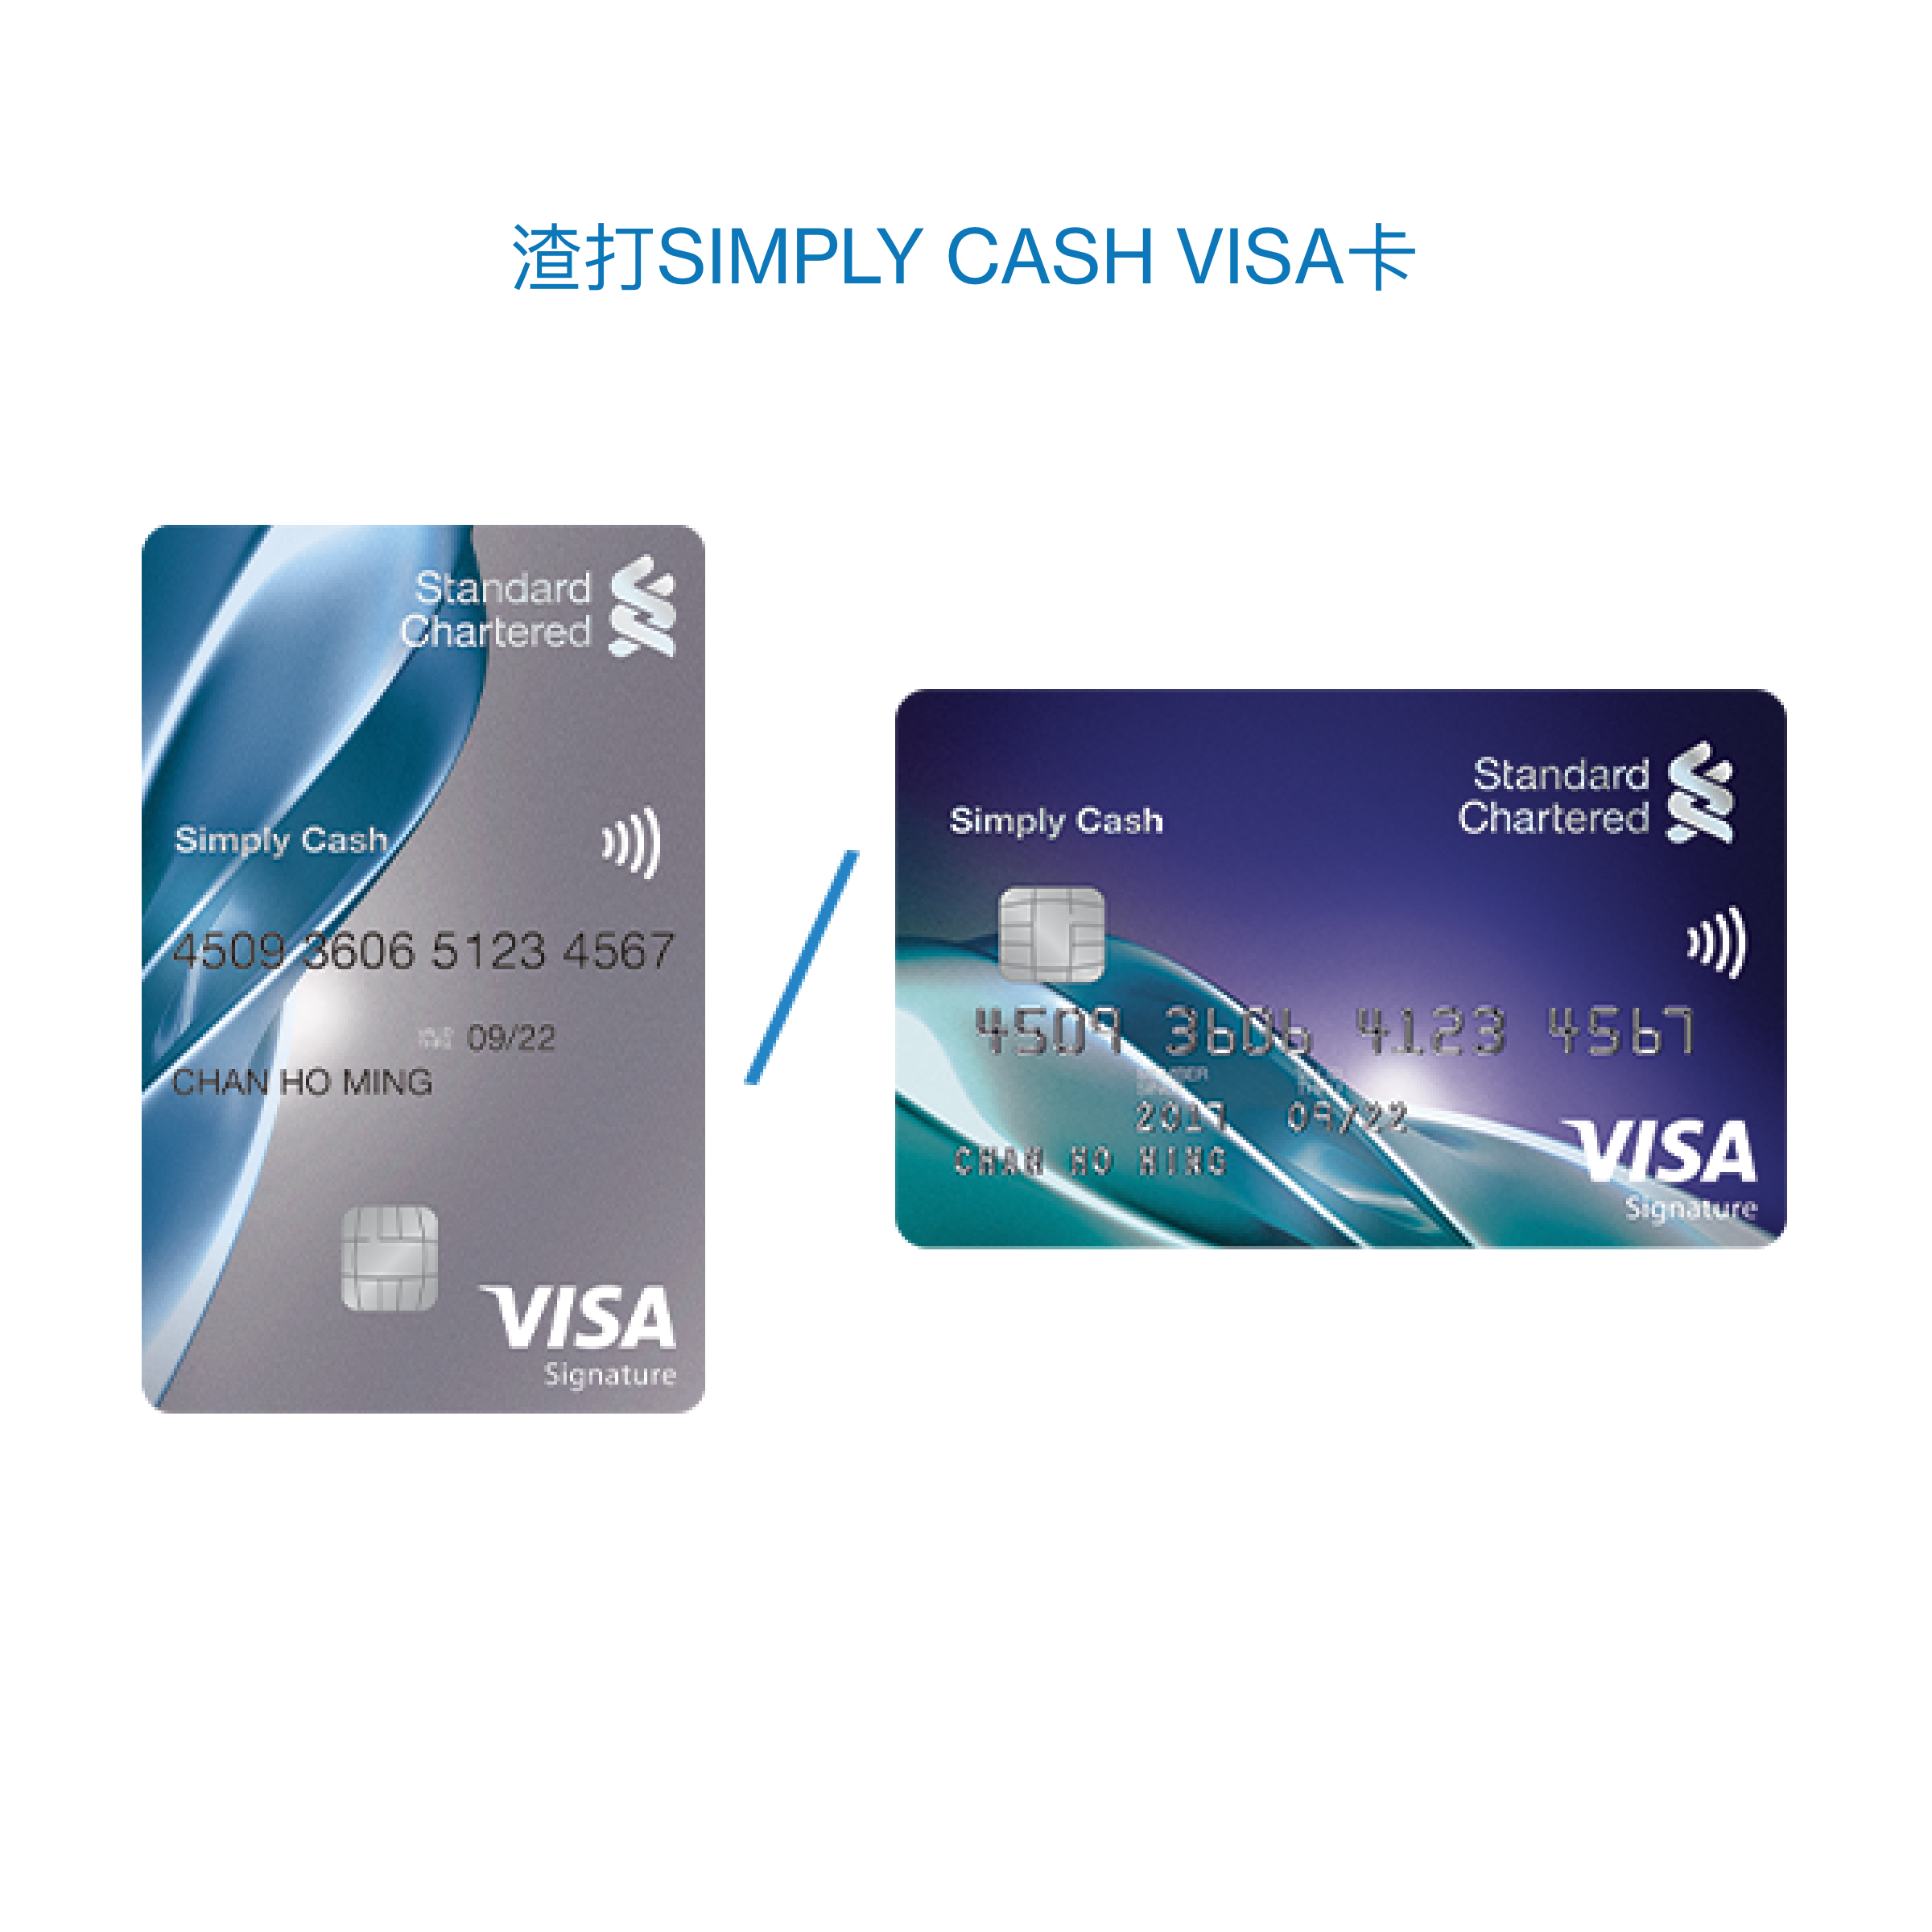 Cc category page simply cash visa card